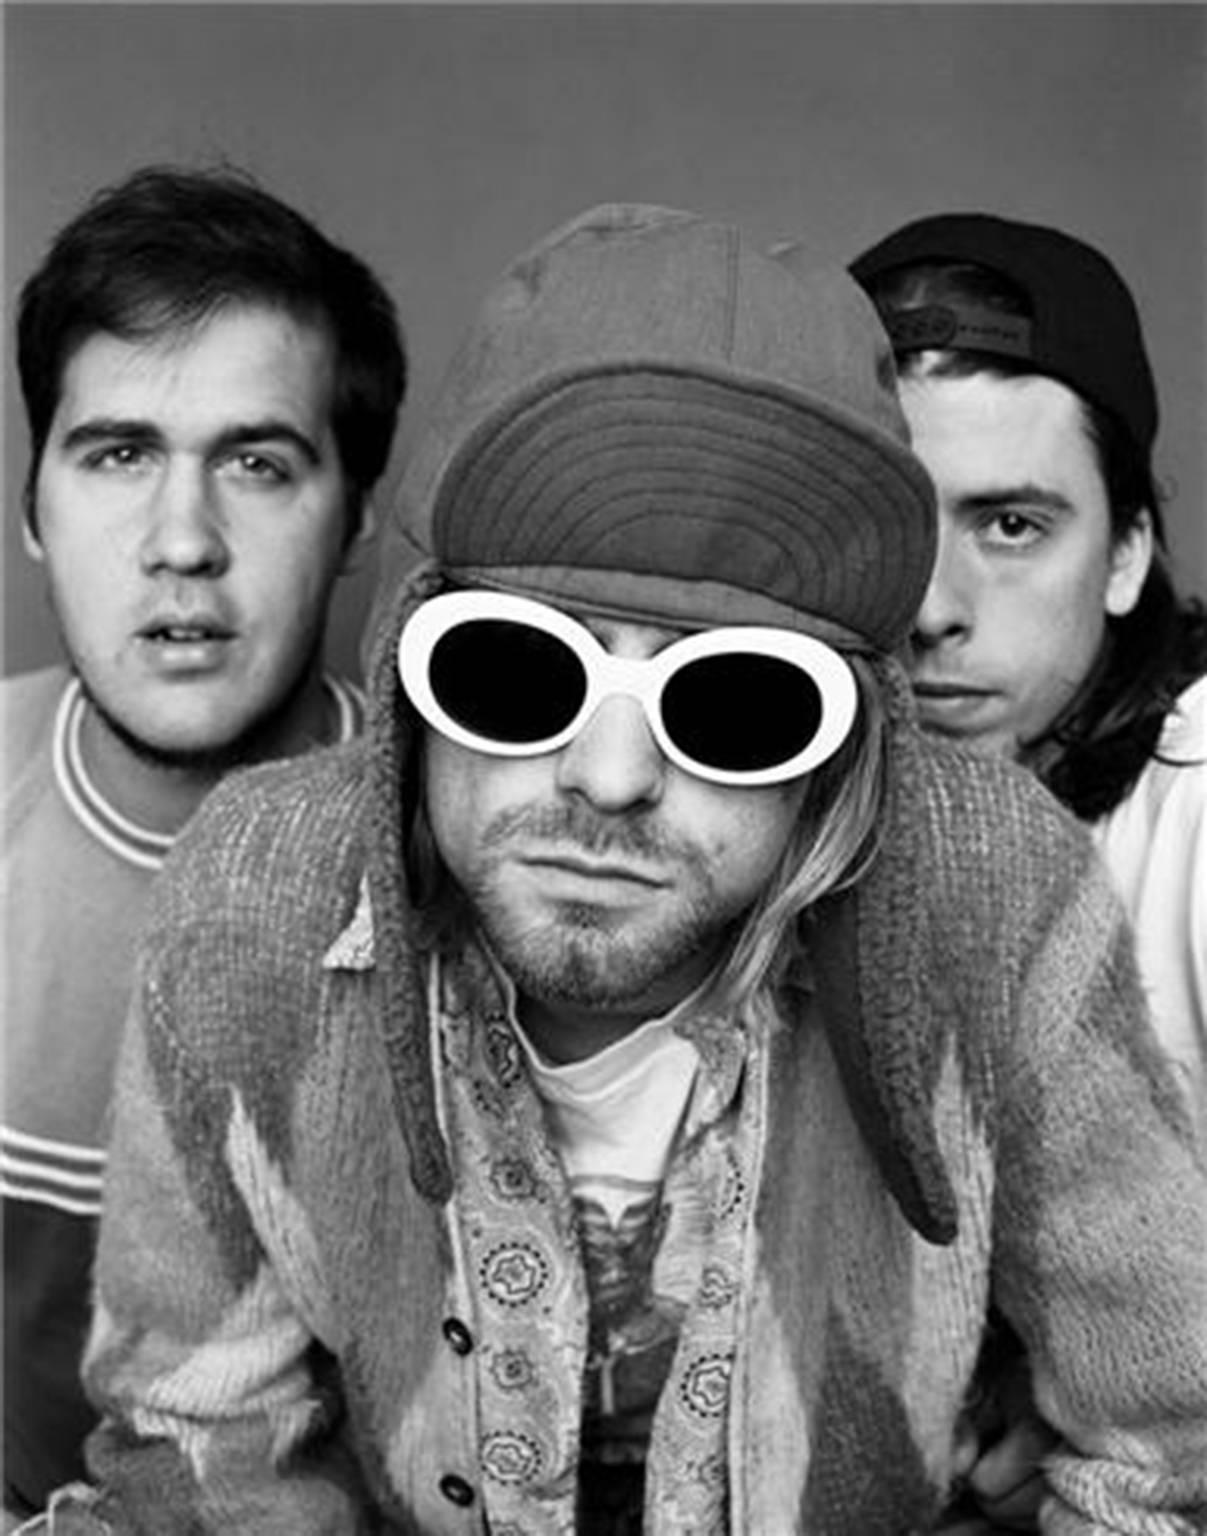 Jesse Frohman Black and White Photograph - Nirvana "C"